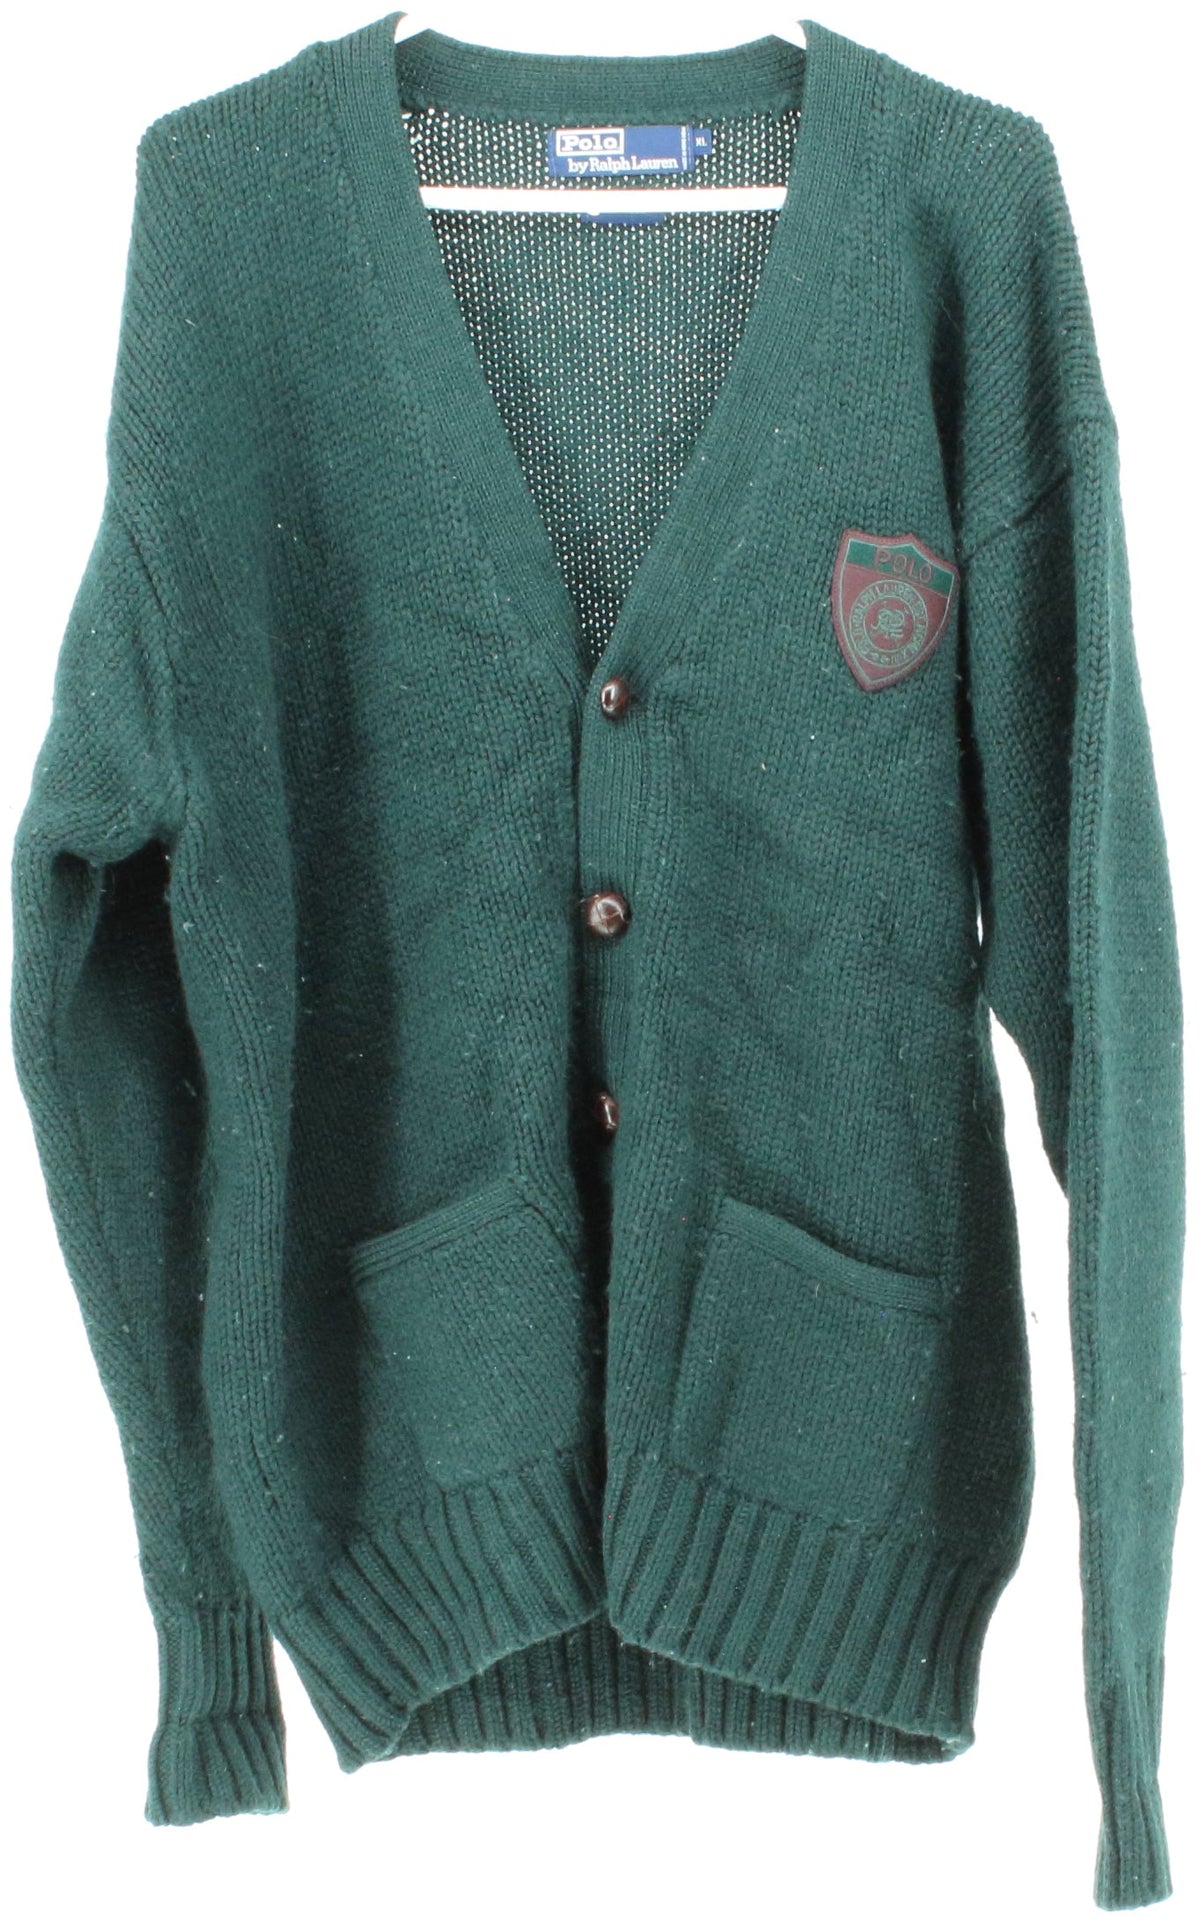 Polo by Ralph Lauren Dark Green Wool Men's Cardigan Sweater